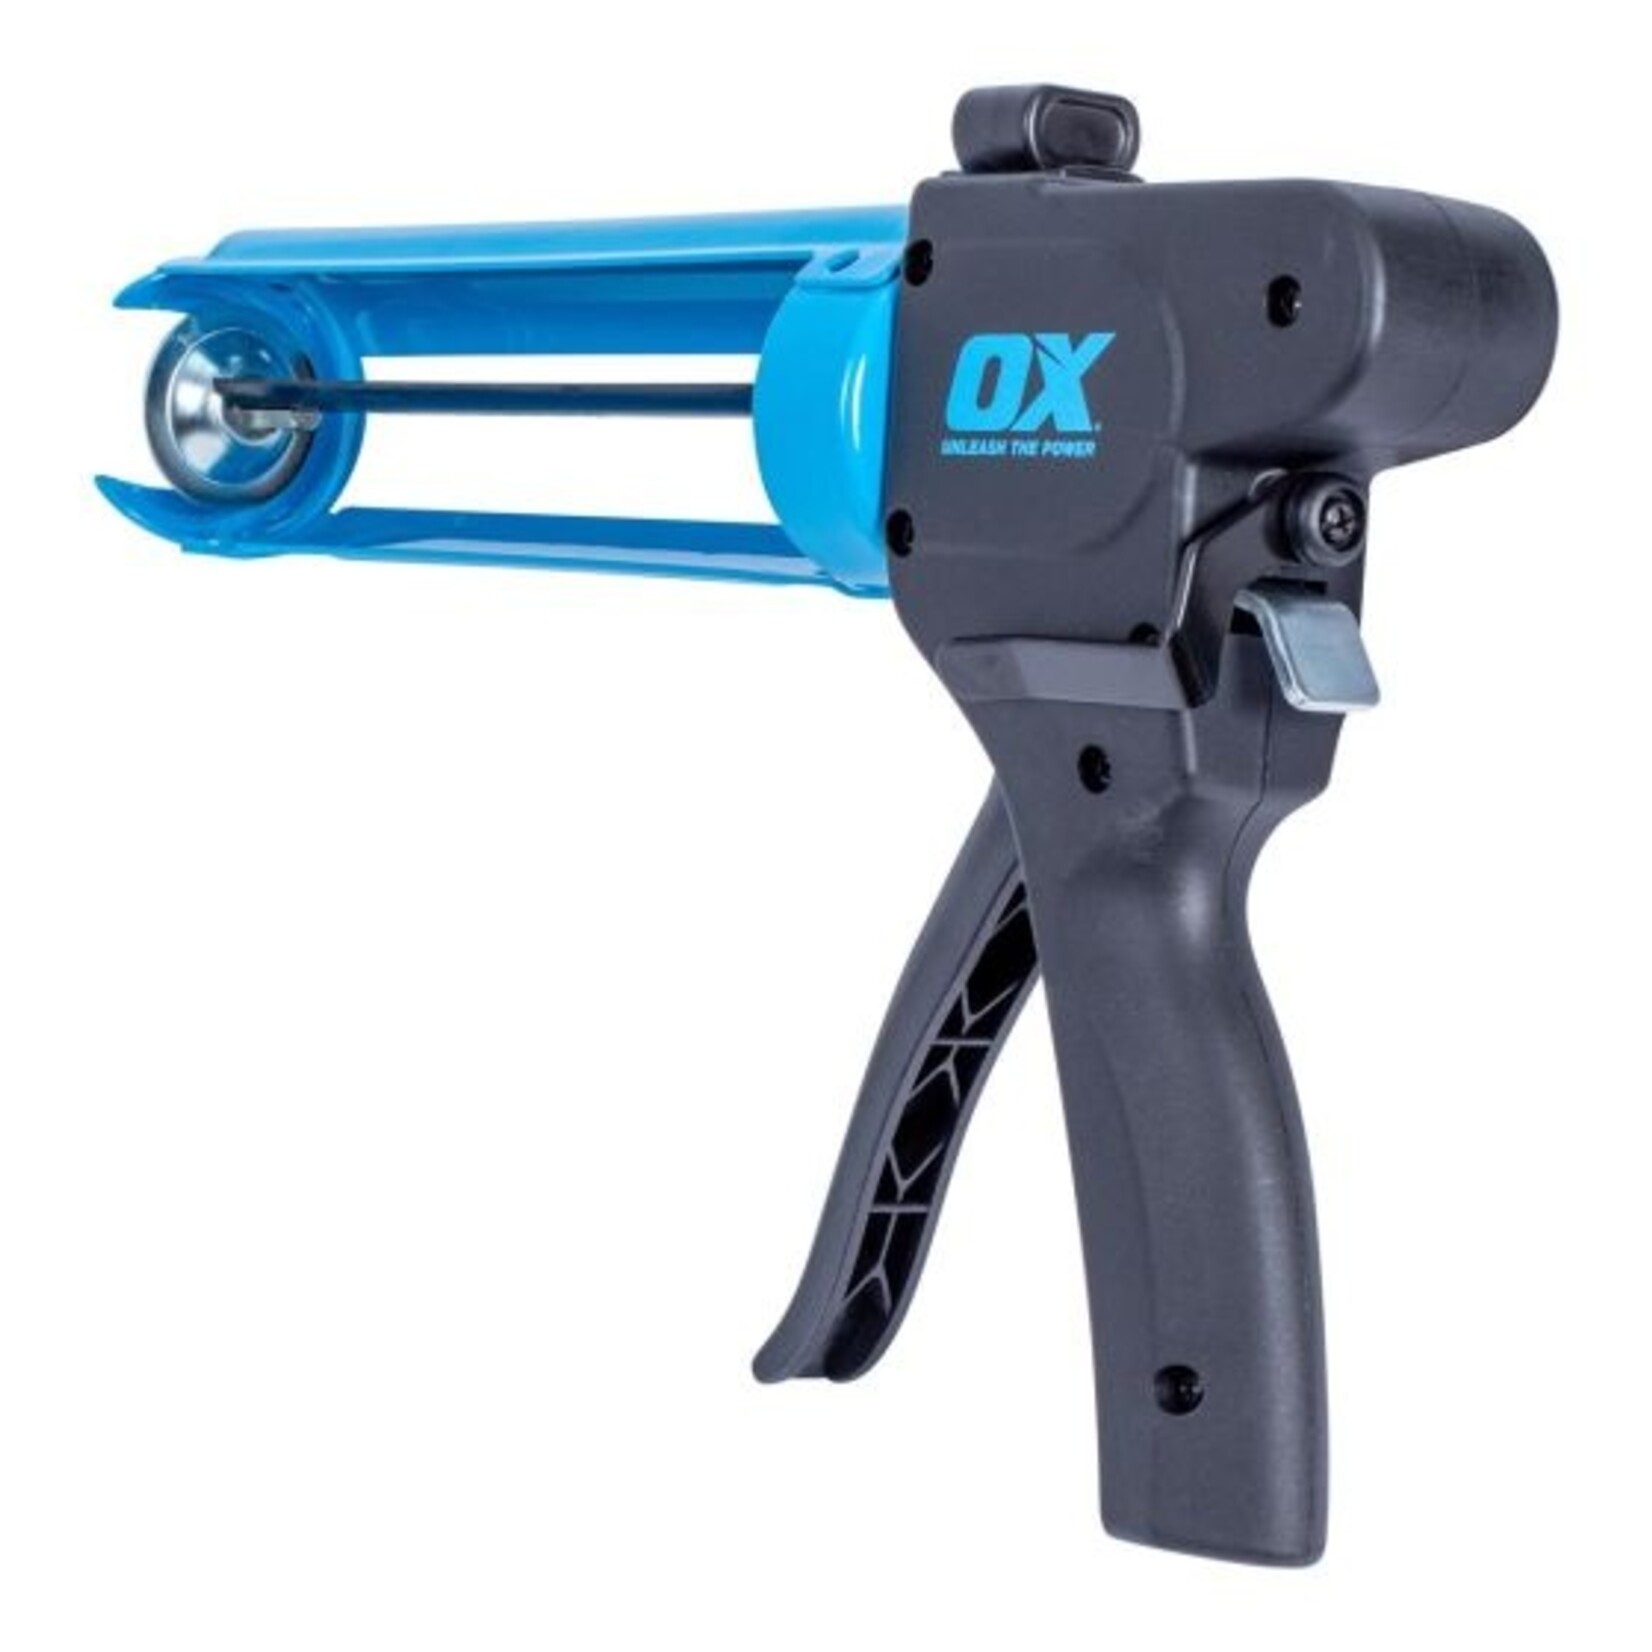 Ox Tools OX Pro 10-Ounce / 290ml Rodless Caulk Gun | 7:1 Thrust Ratio